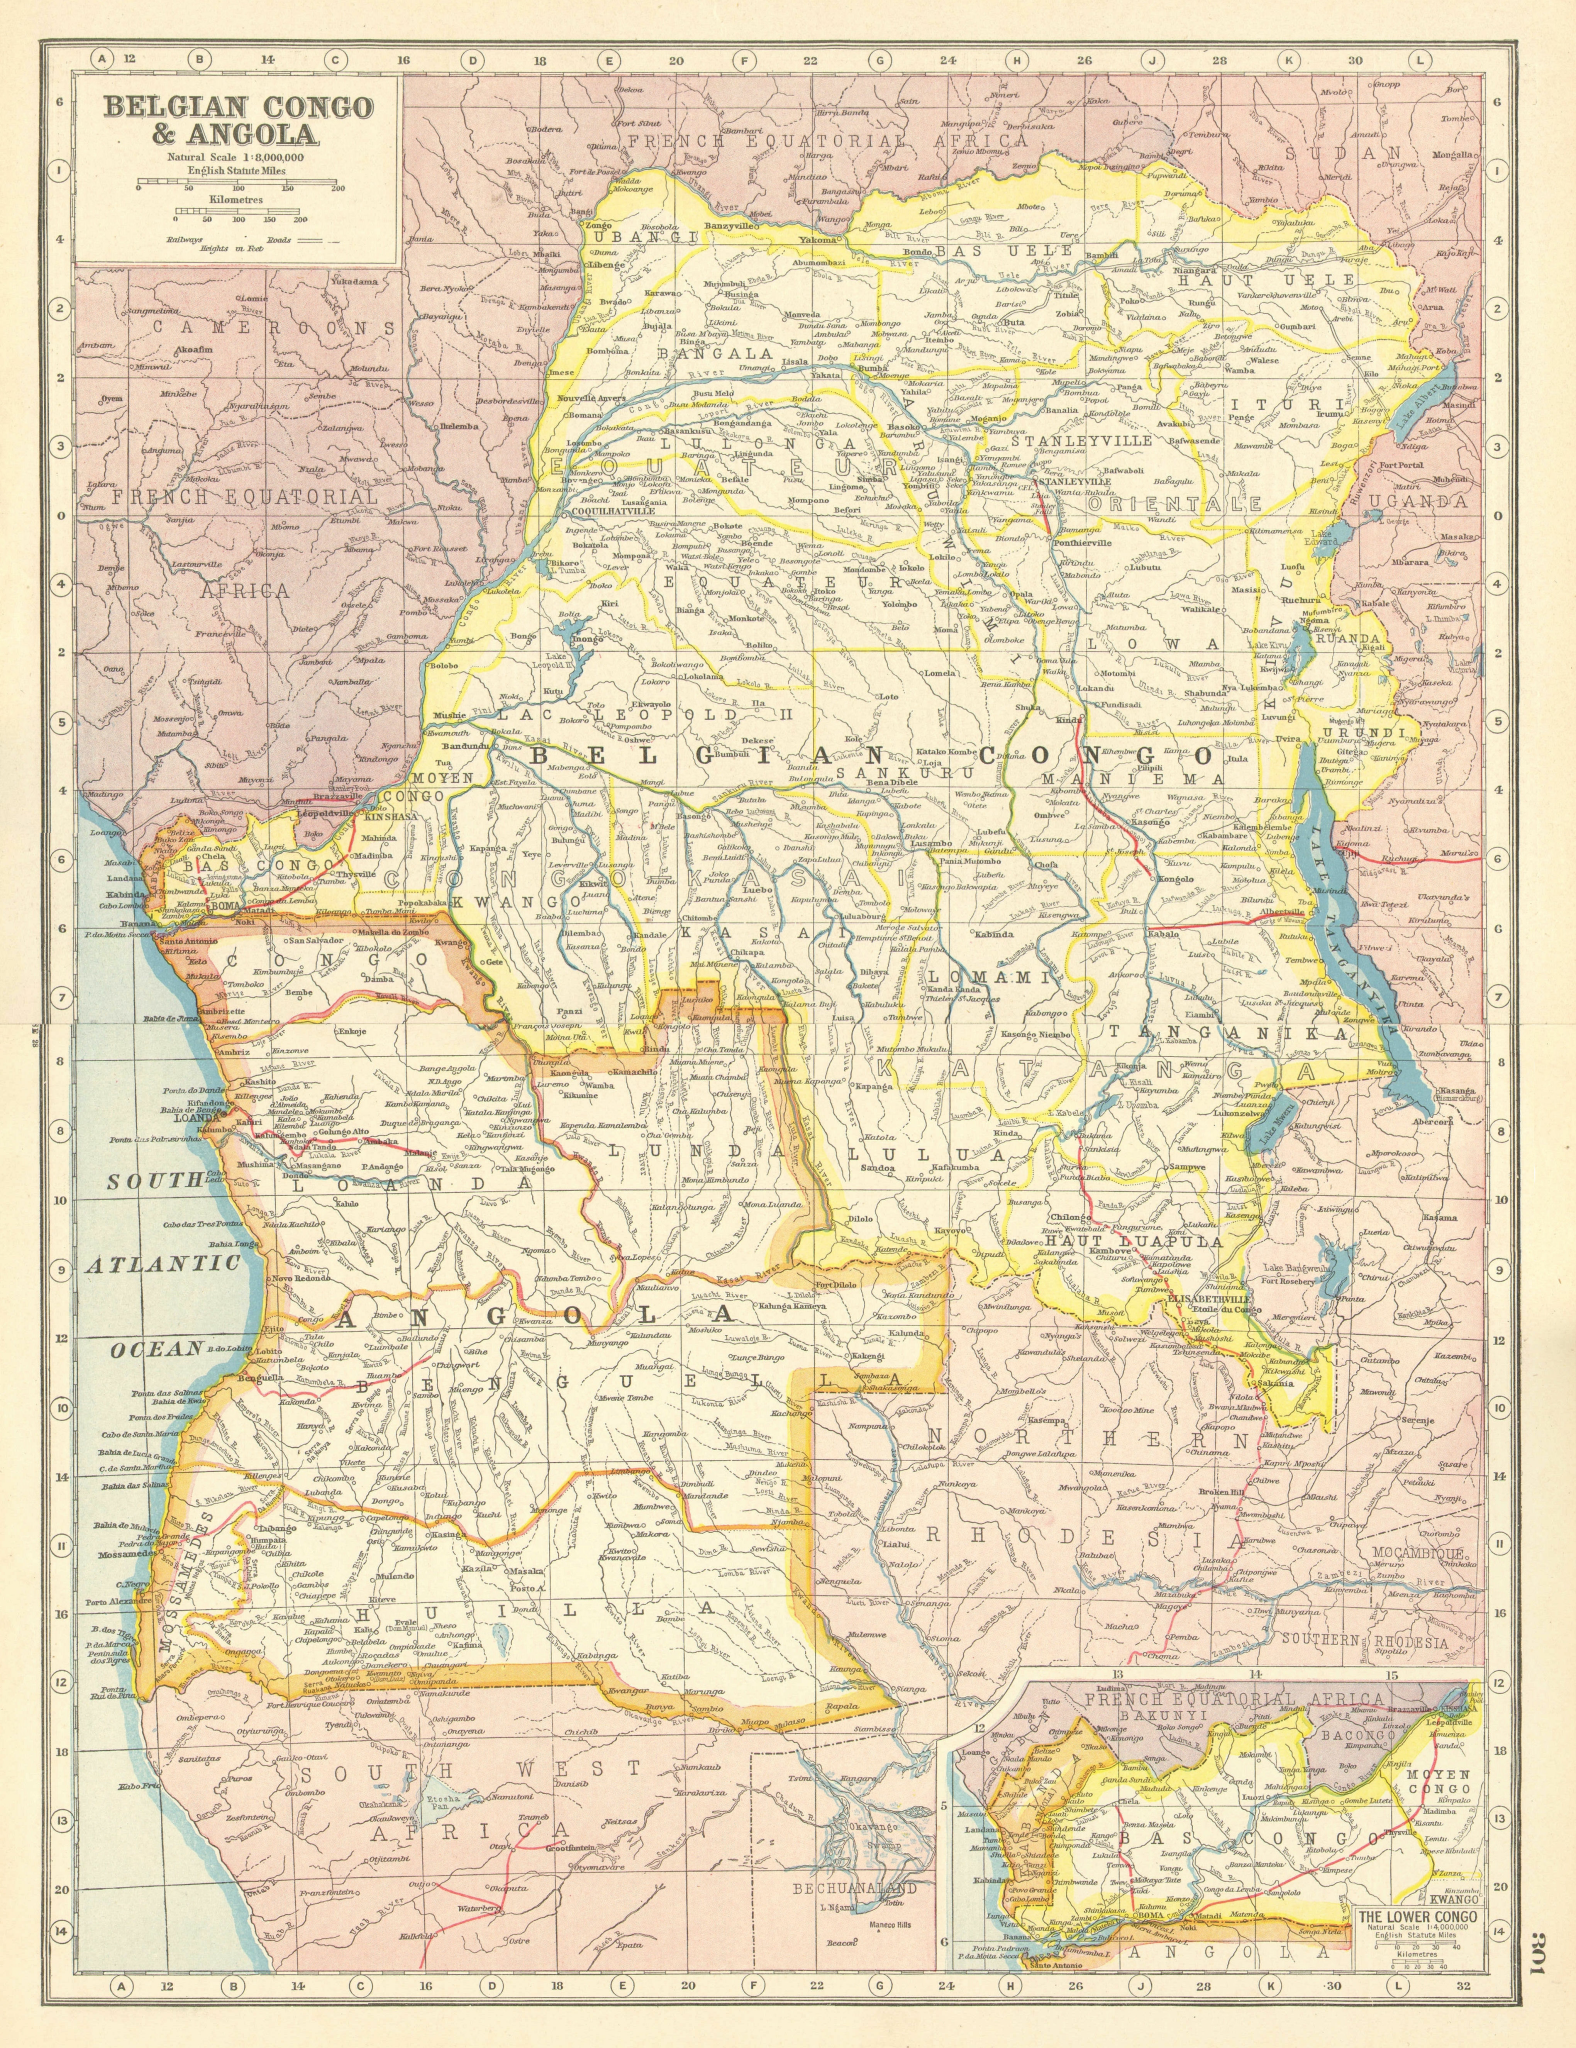 Associate Product BELGIAN CONGO/ANGOLA. South West Africa Railways Provinces. HARMSWORTH 1920 map